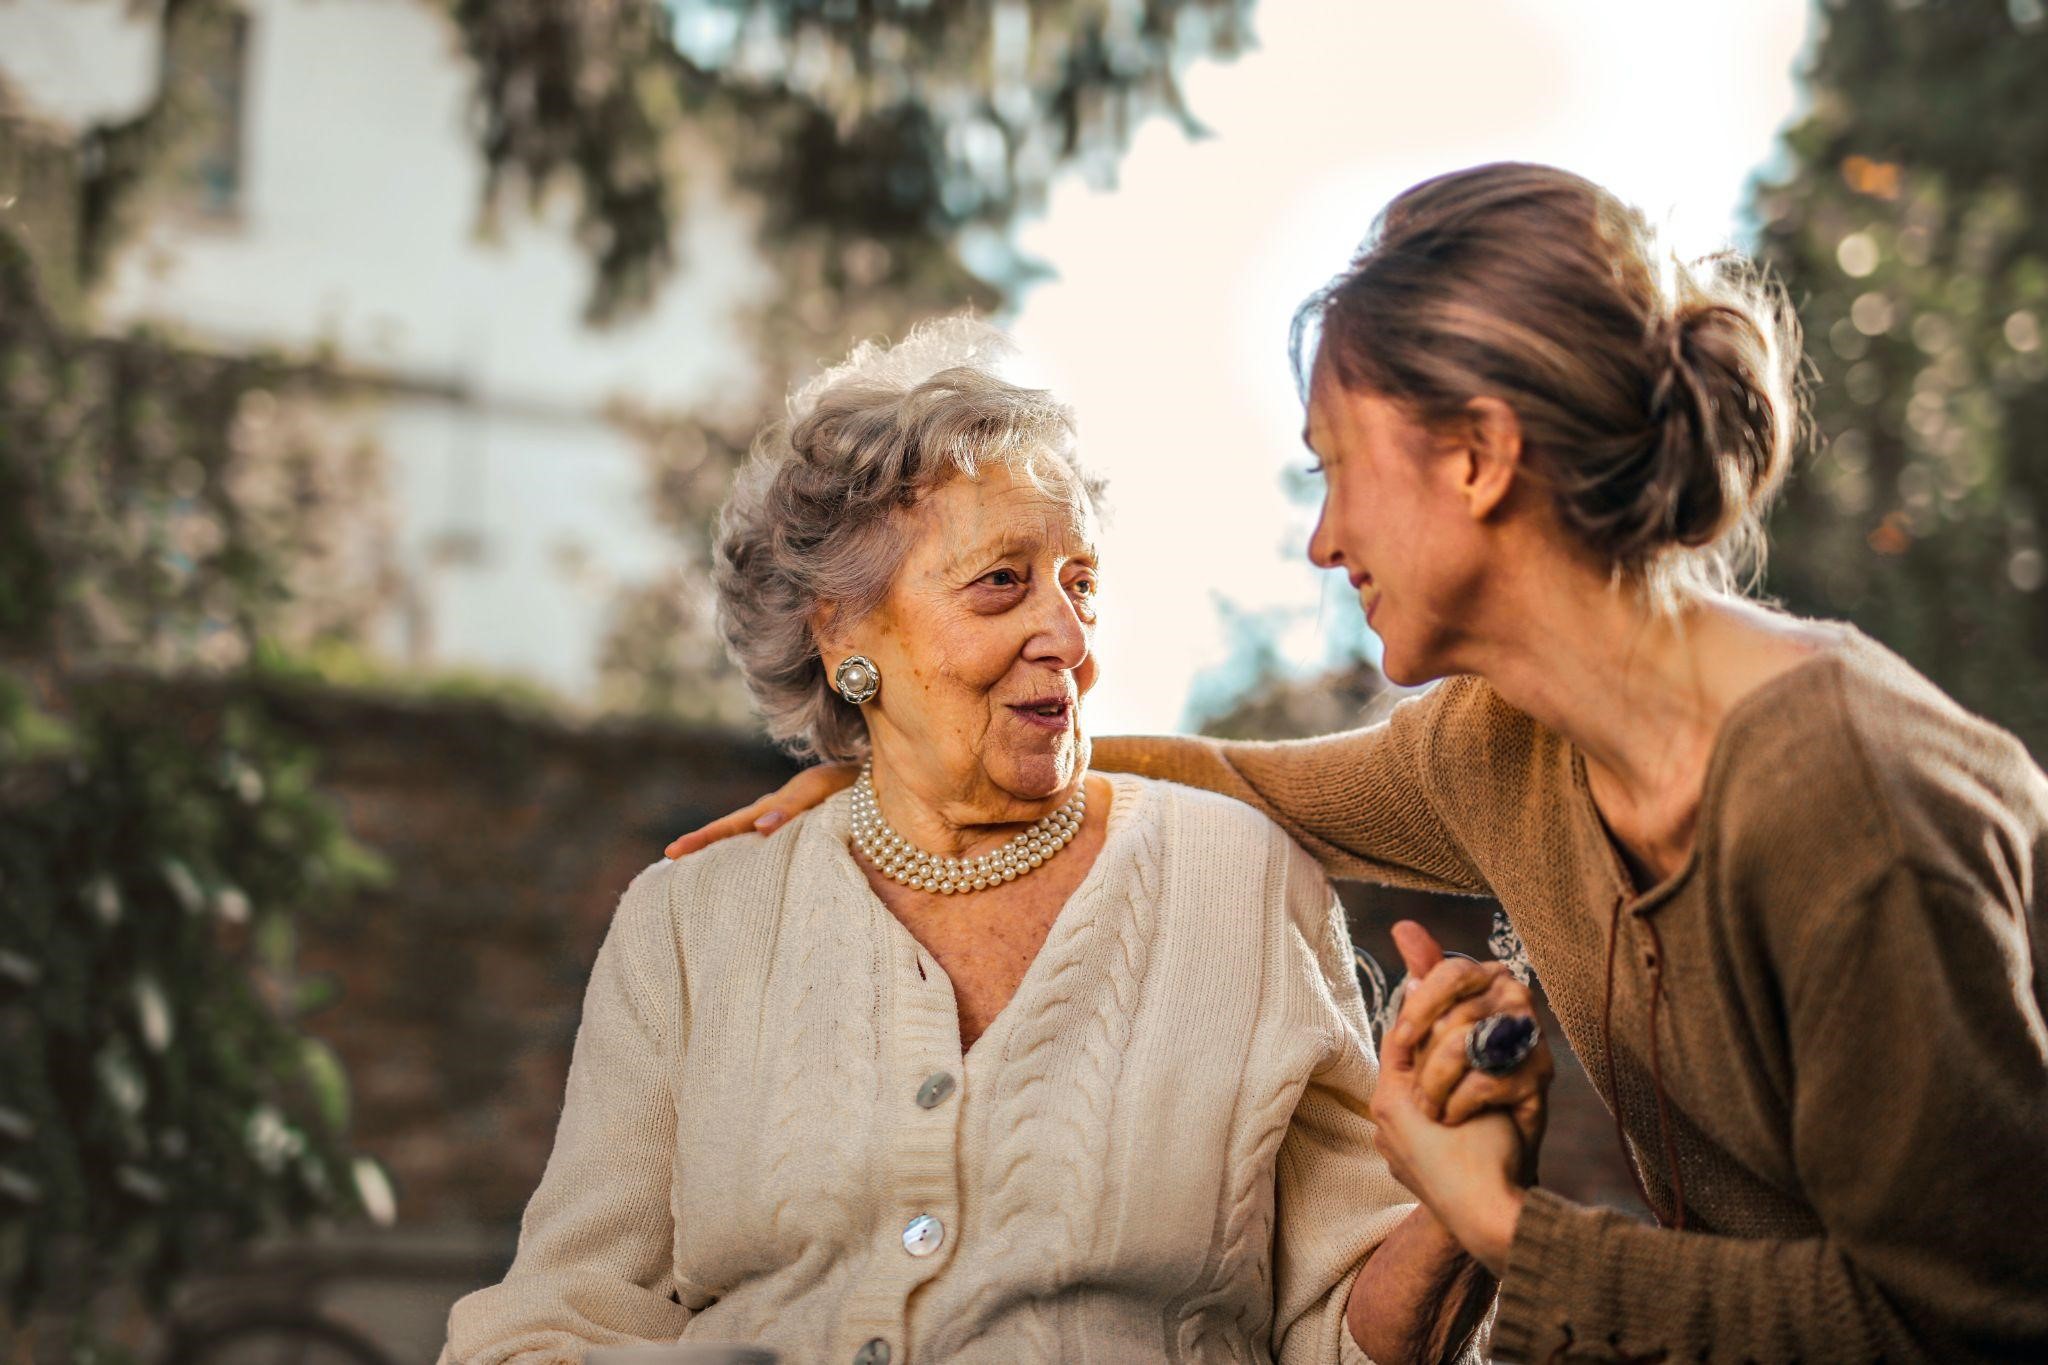 Why Hire an On-demand Senior Caregiver with Kiidu?